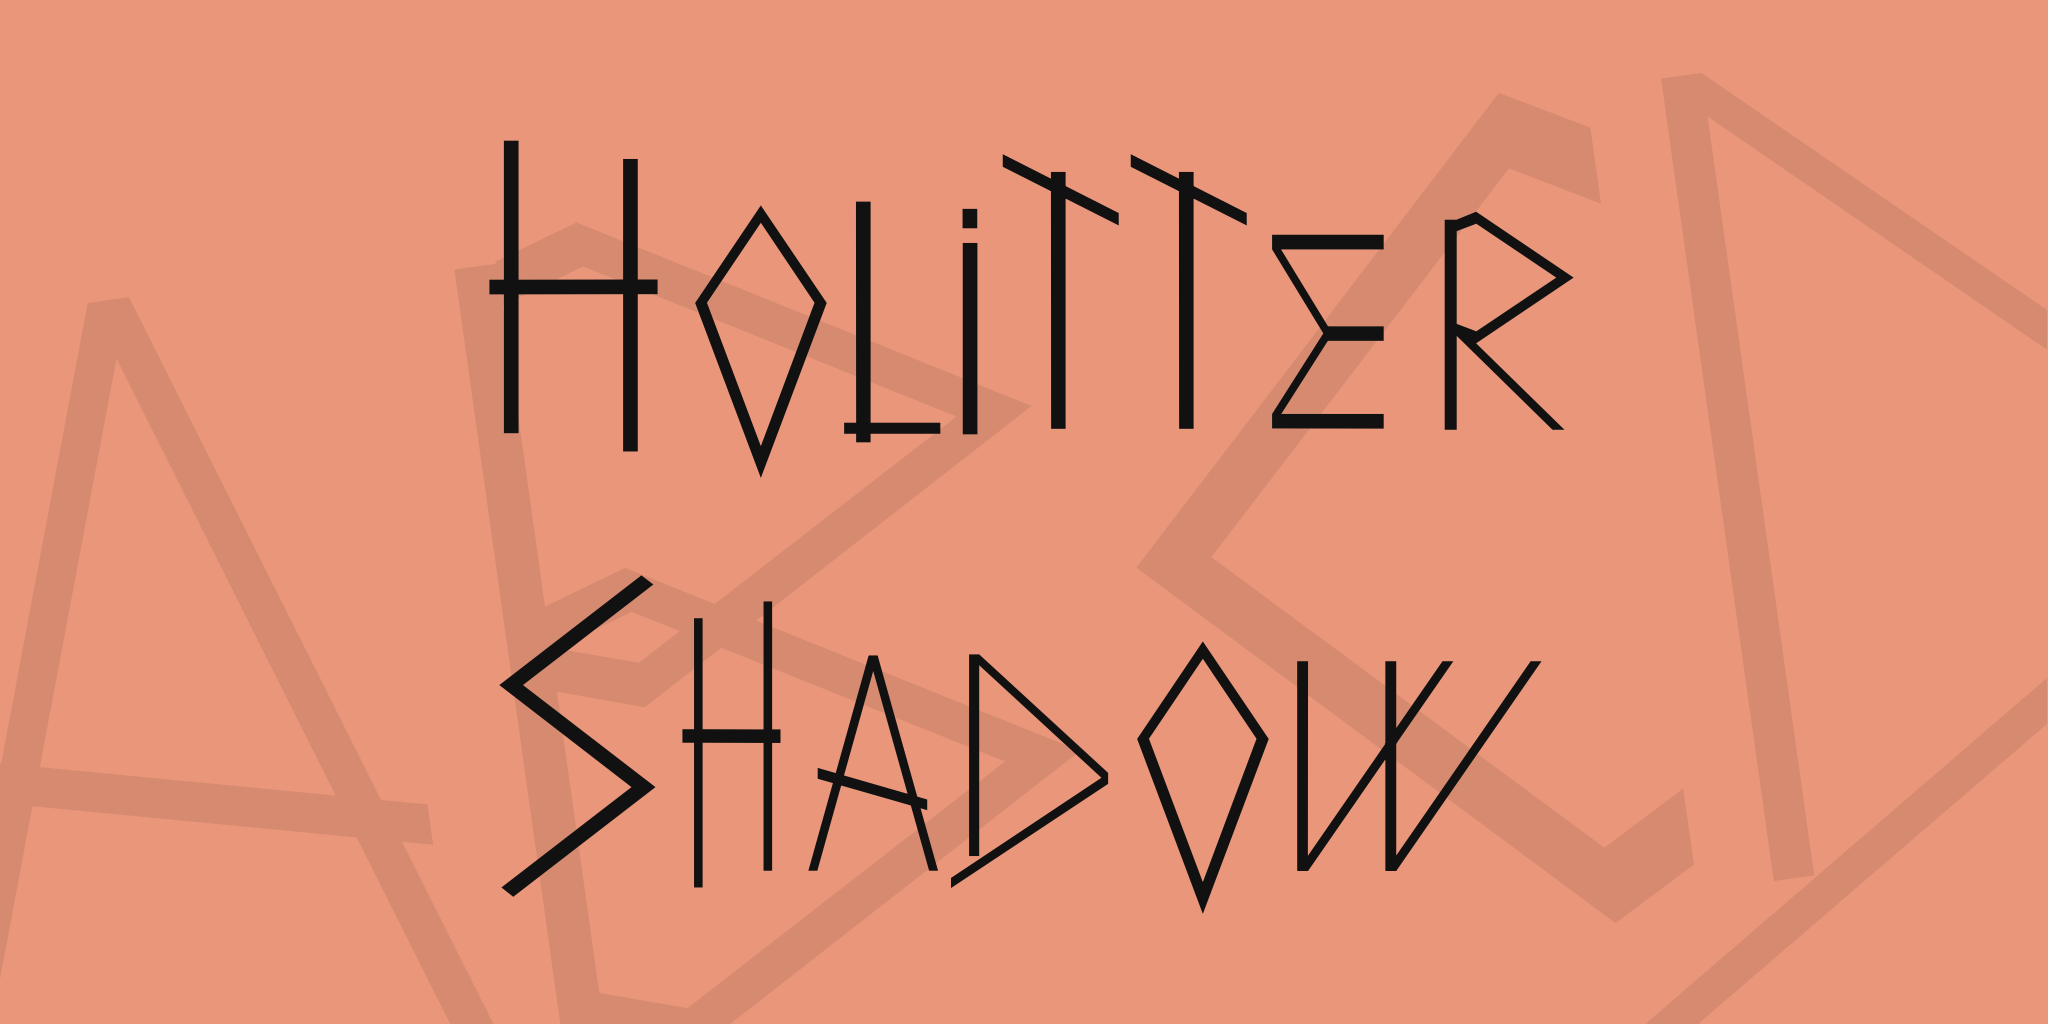 Holitter Shadow